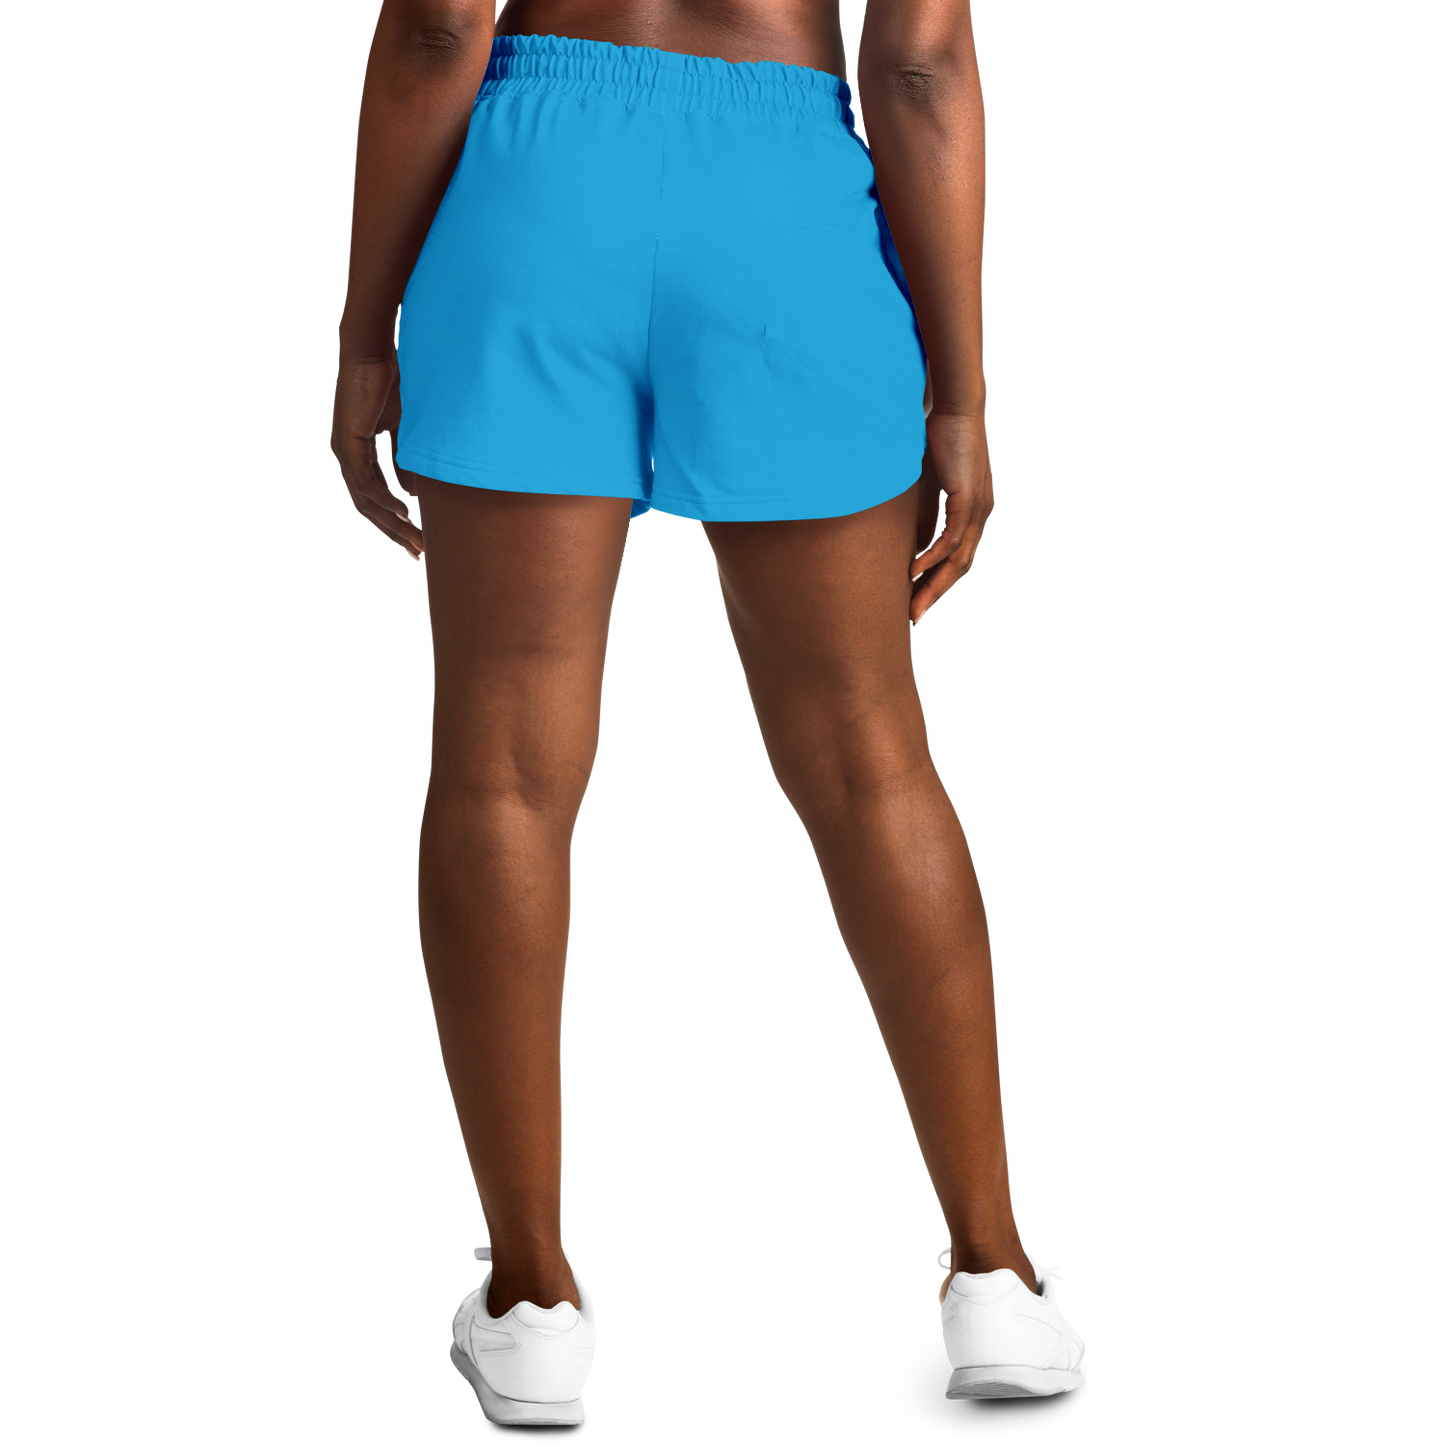 Miami Women's Blue Shorts